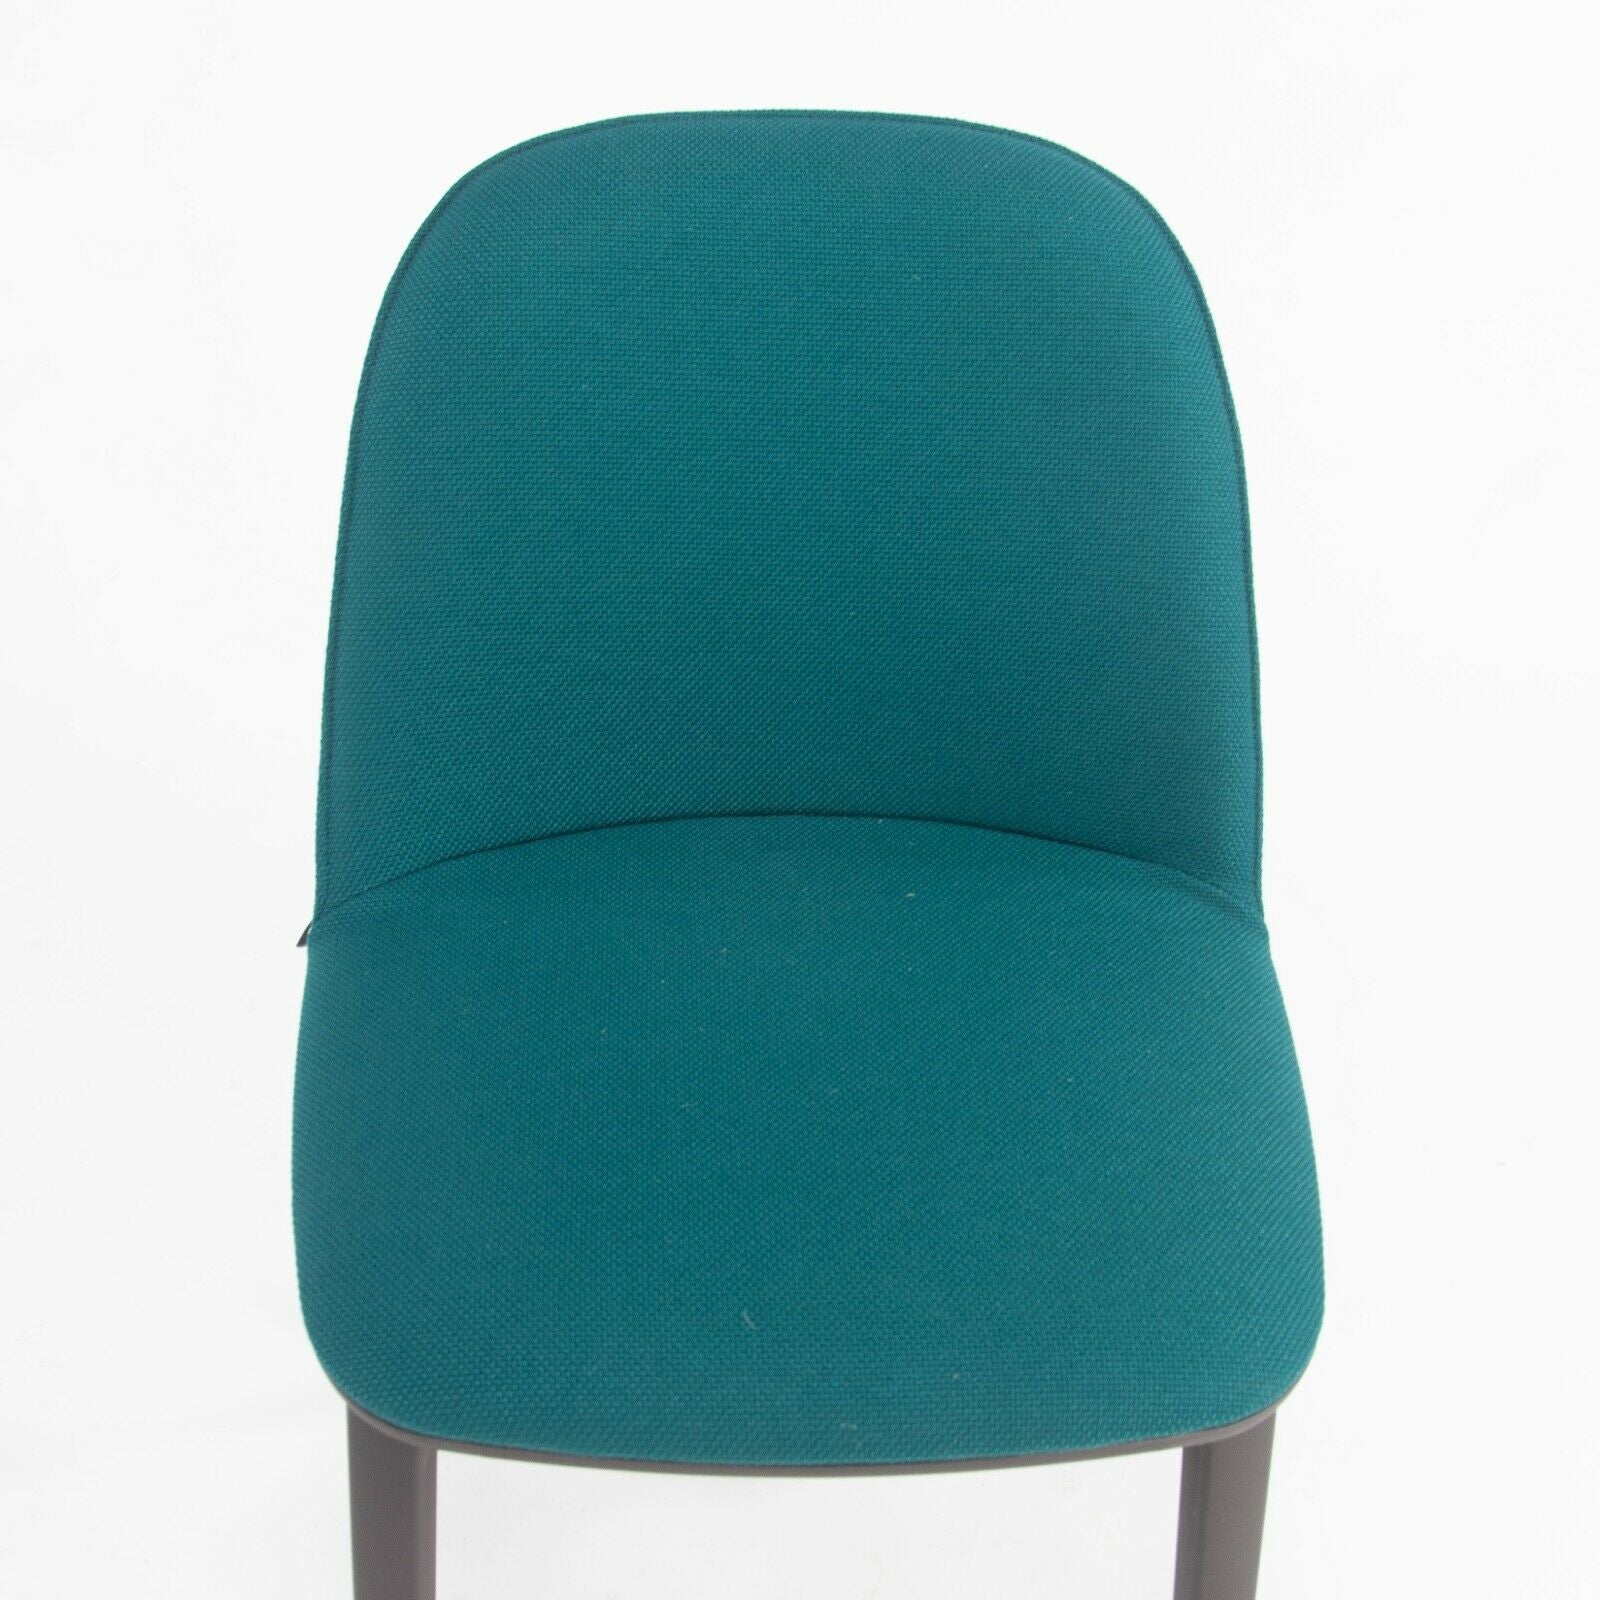 2019 Vitra Softshell Side Chair w/ Teal Blue Fabric by Ronan & Erwan Bouroullec